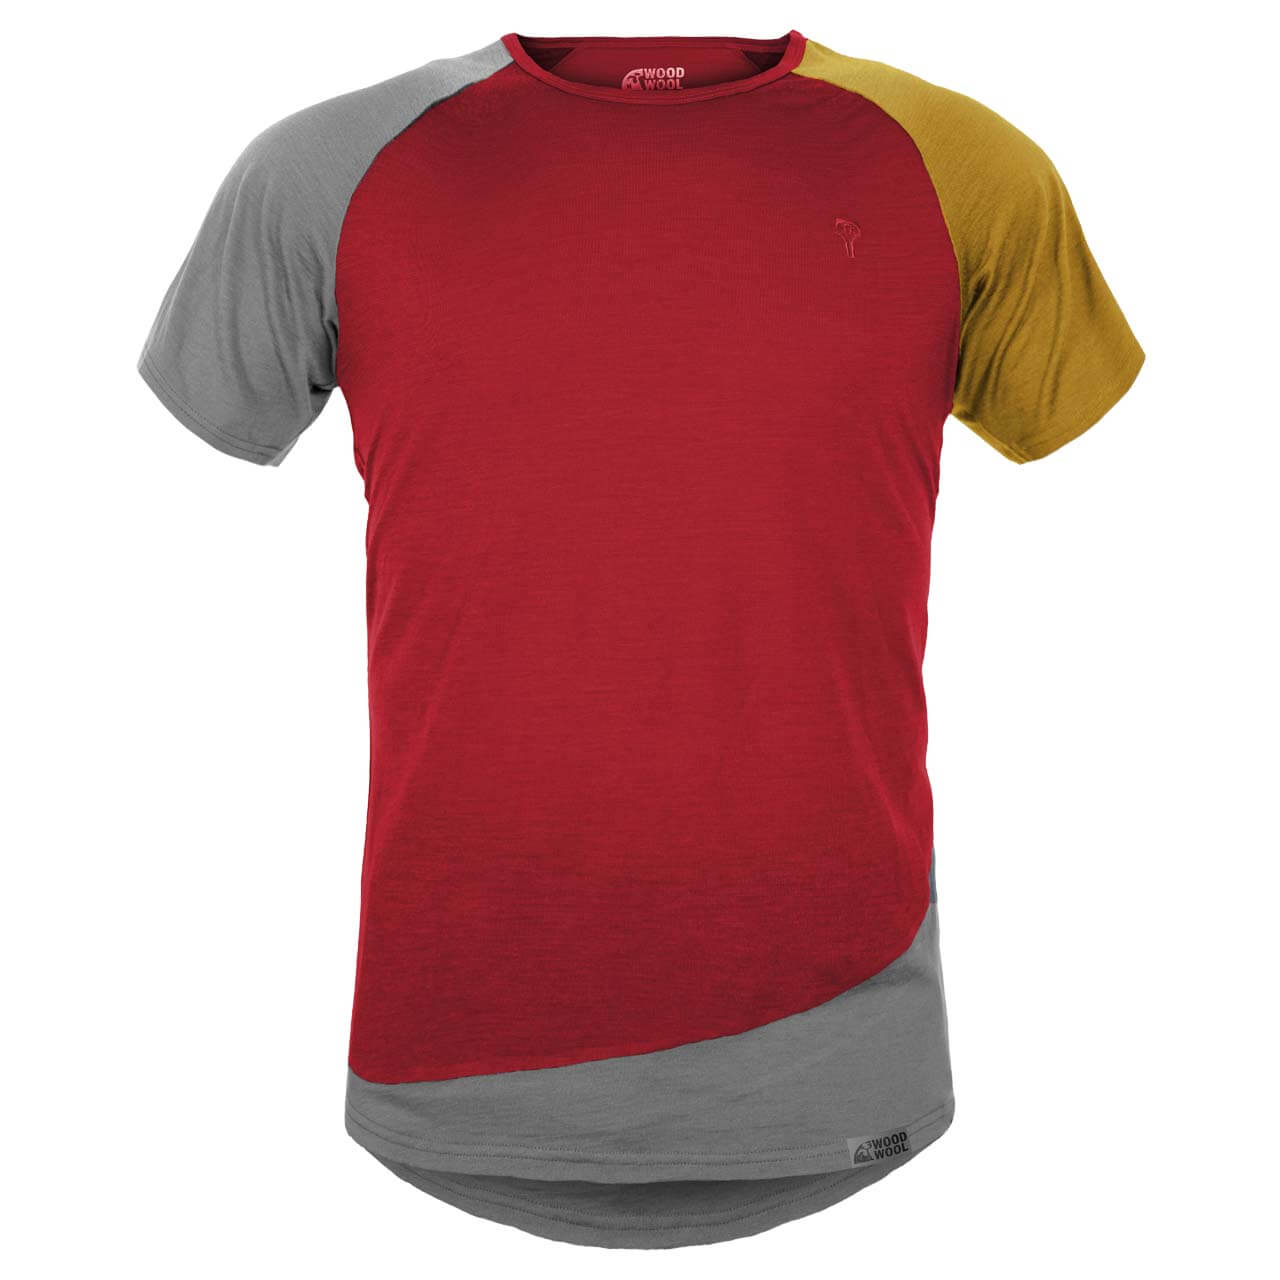 Grüezi Bag WoodWool T-Shirt Mr. Kirk - Fired Red Brick, S von Grüezi Bag}